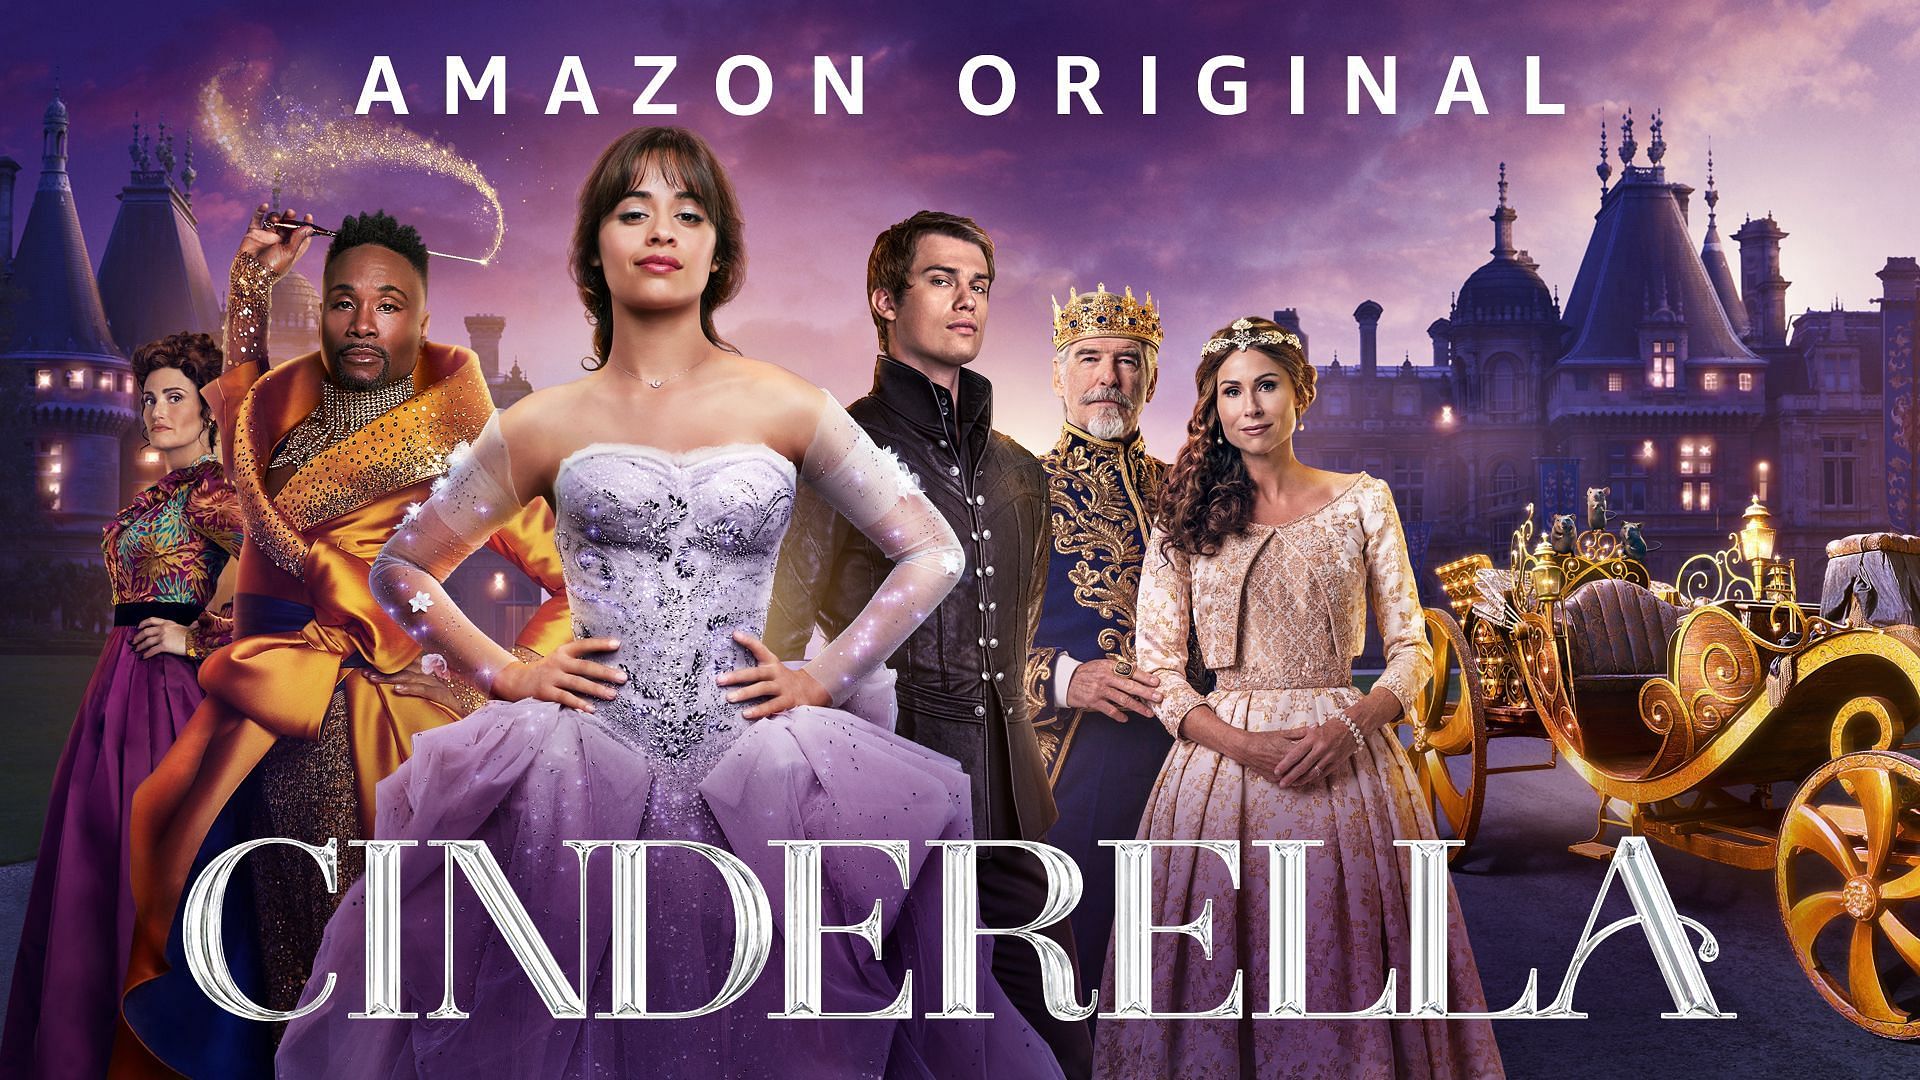 Cinderella (Image via Amazon Prime Video)